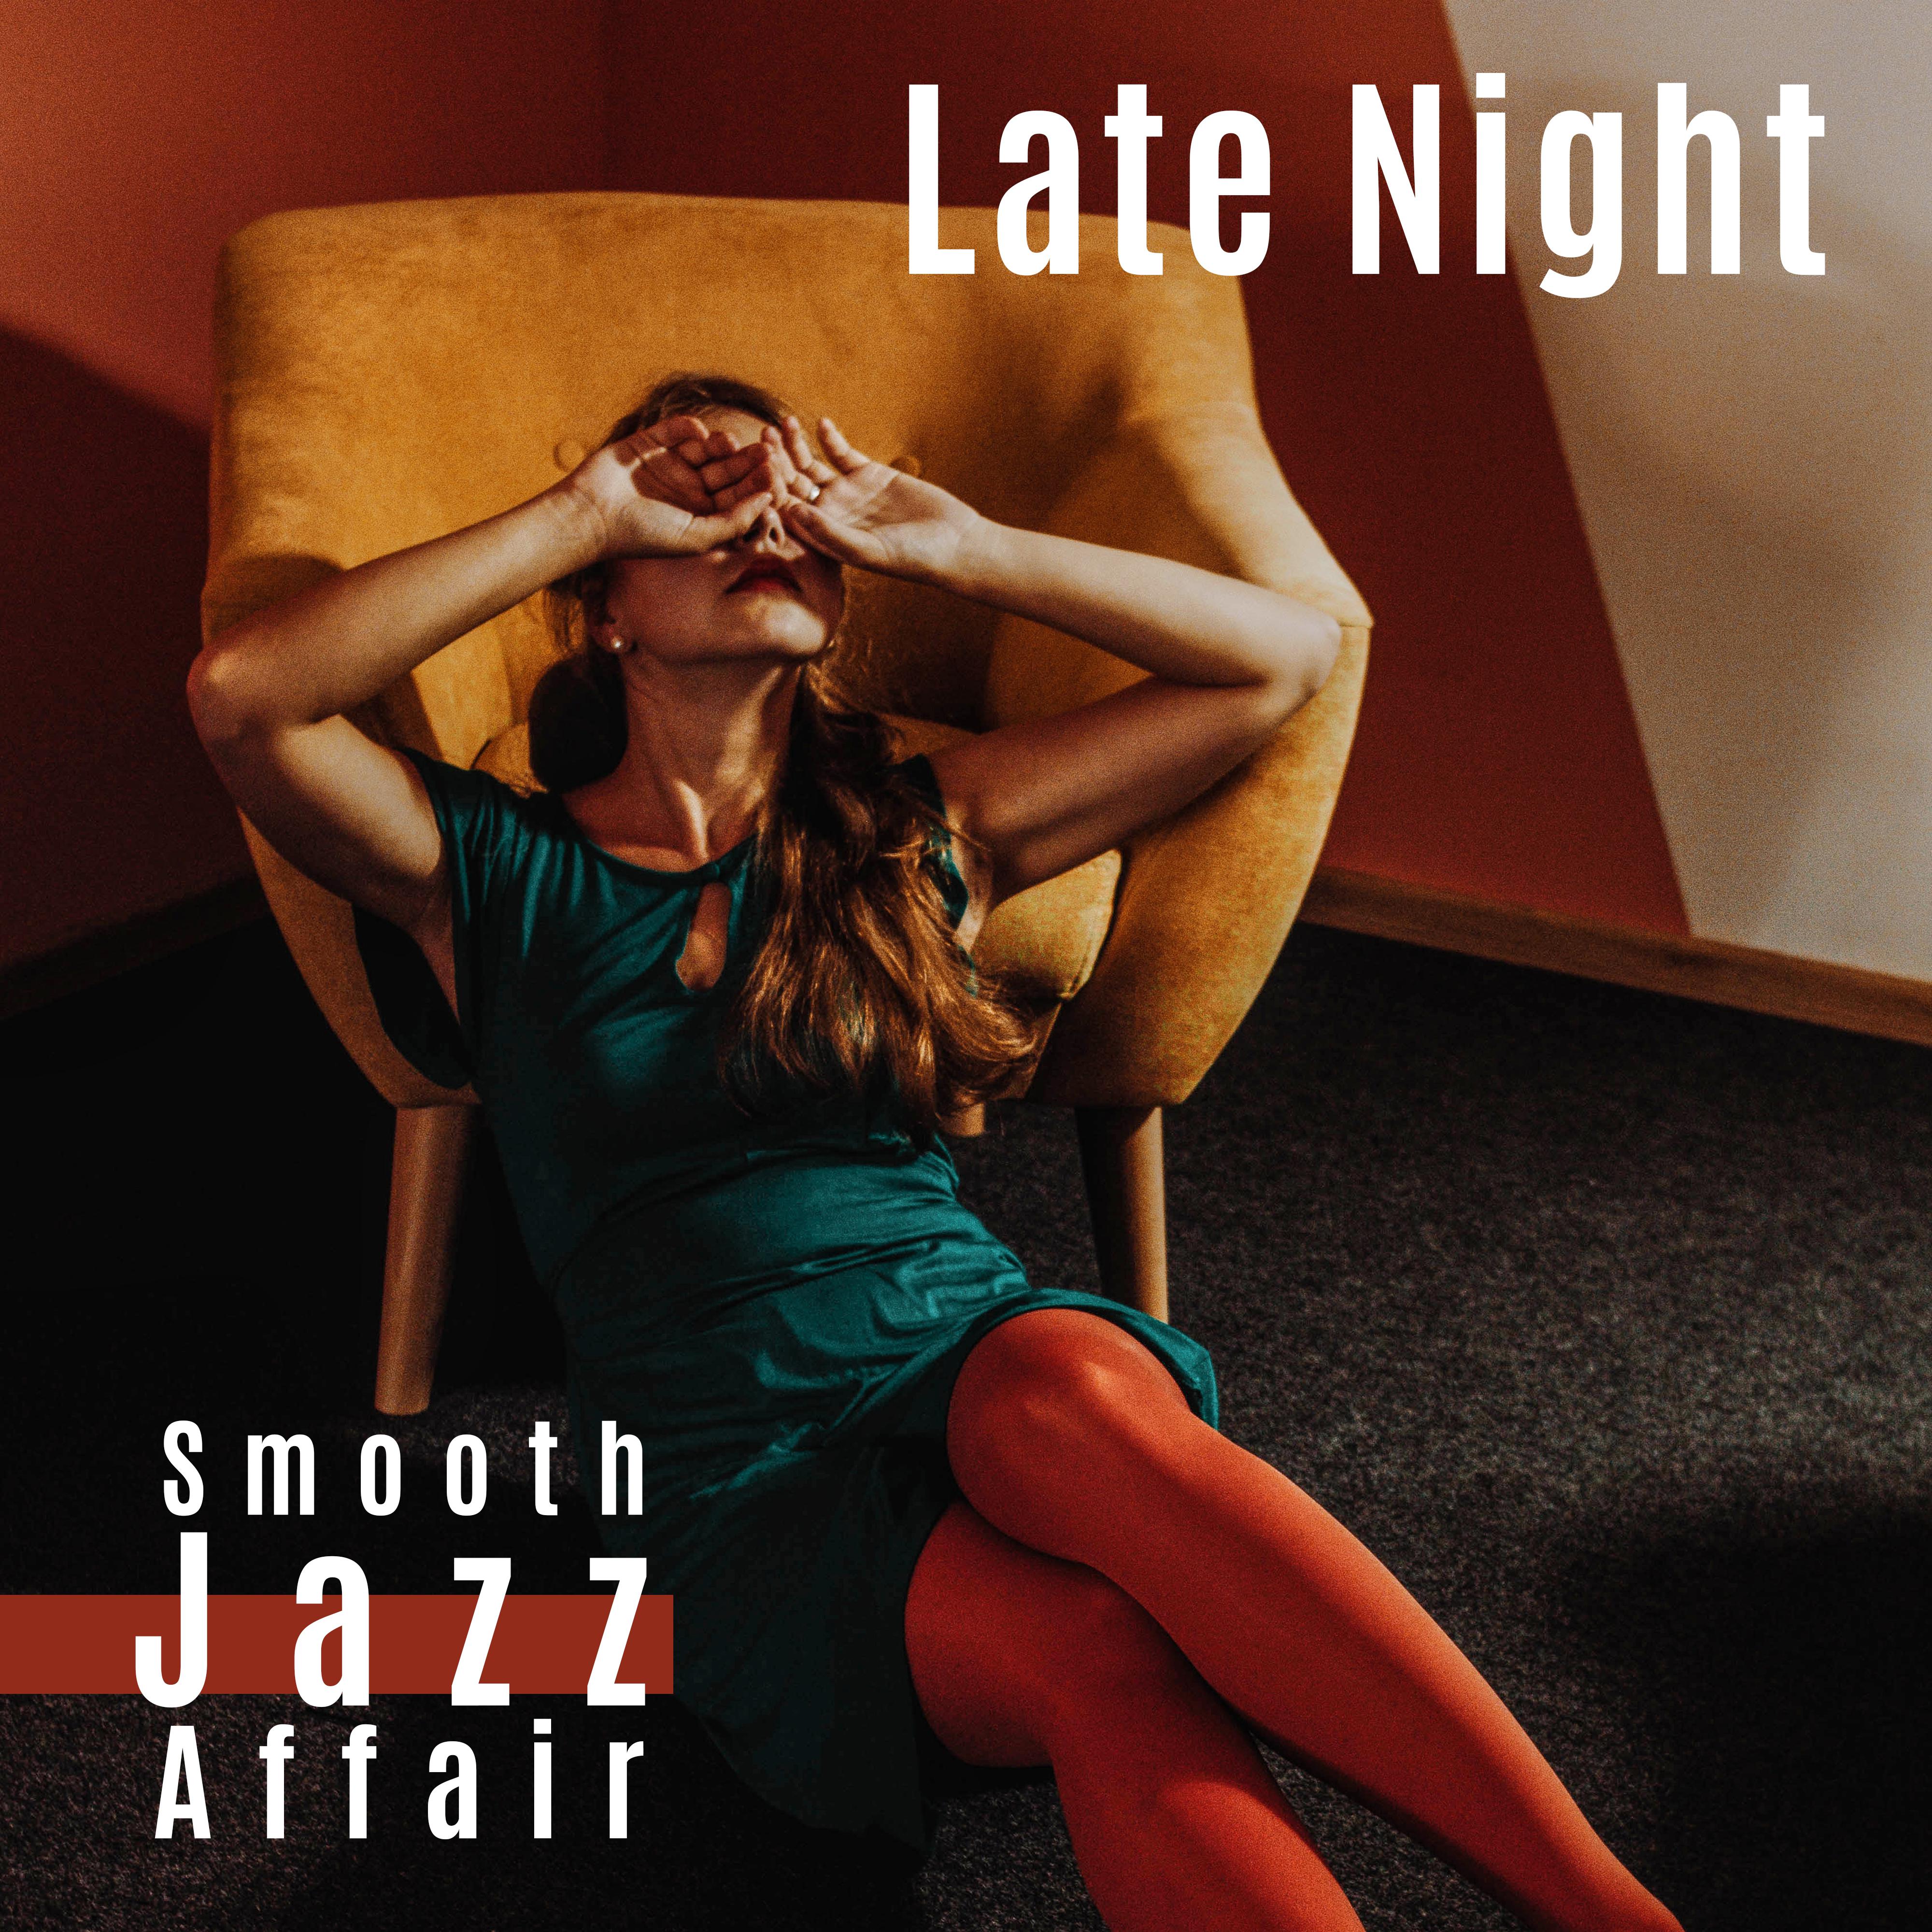 Late Night Smooth Jazz Affair – Ultimate Instrumental Jazz Music Mix